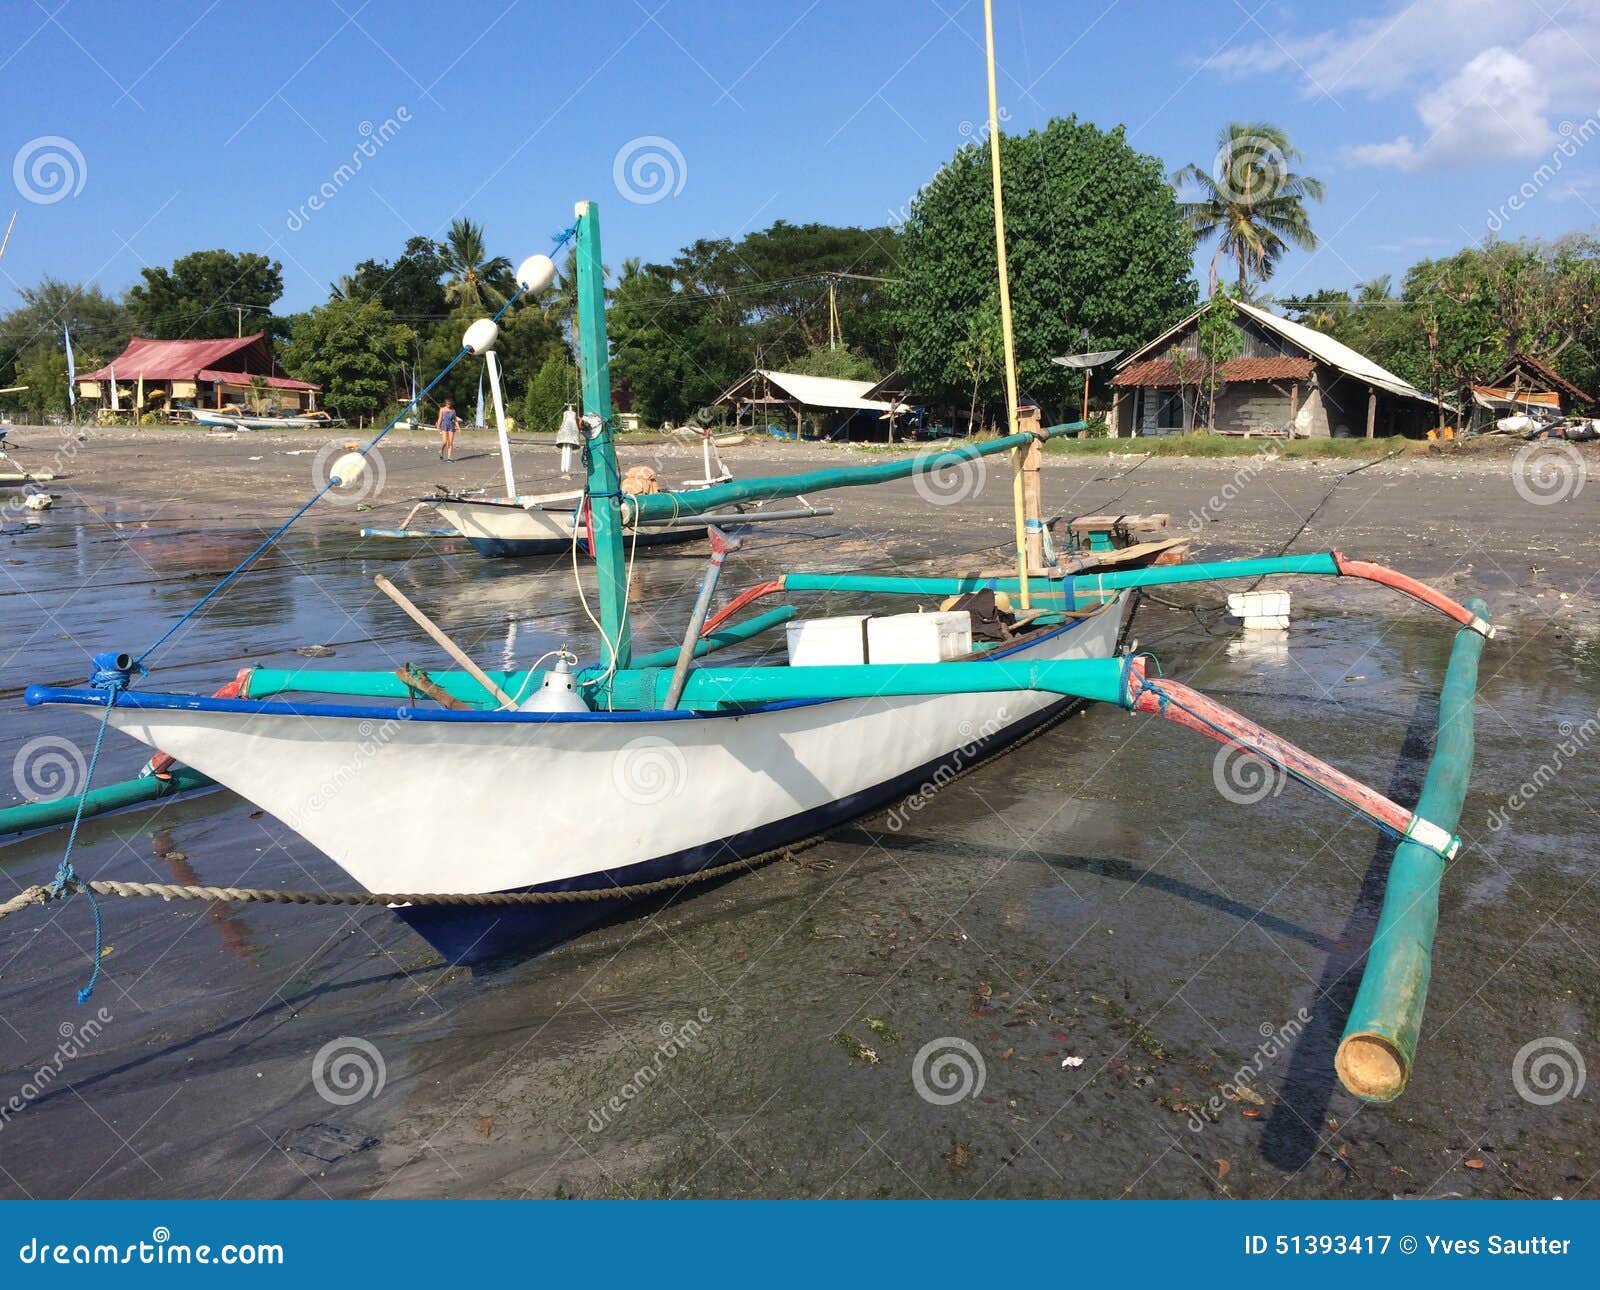 local fishing boat pemuteran beach, north west bali, indonesia